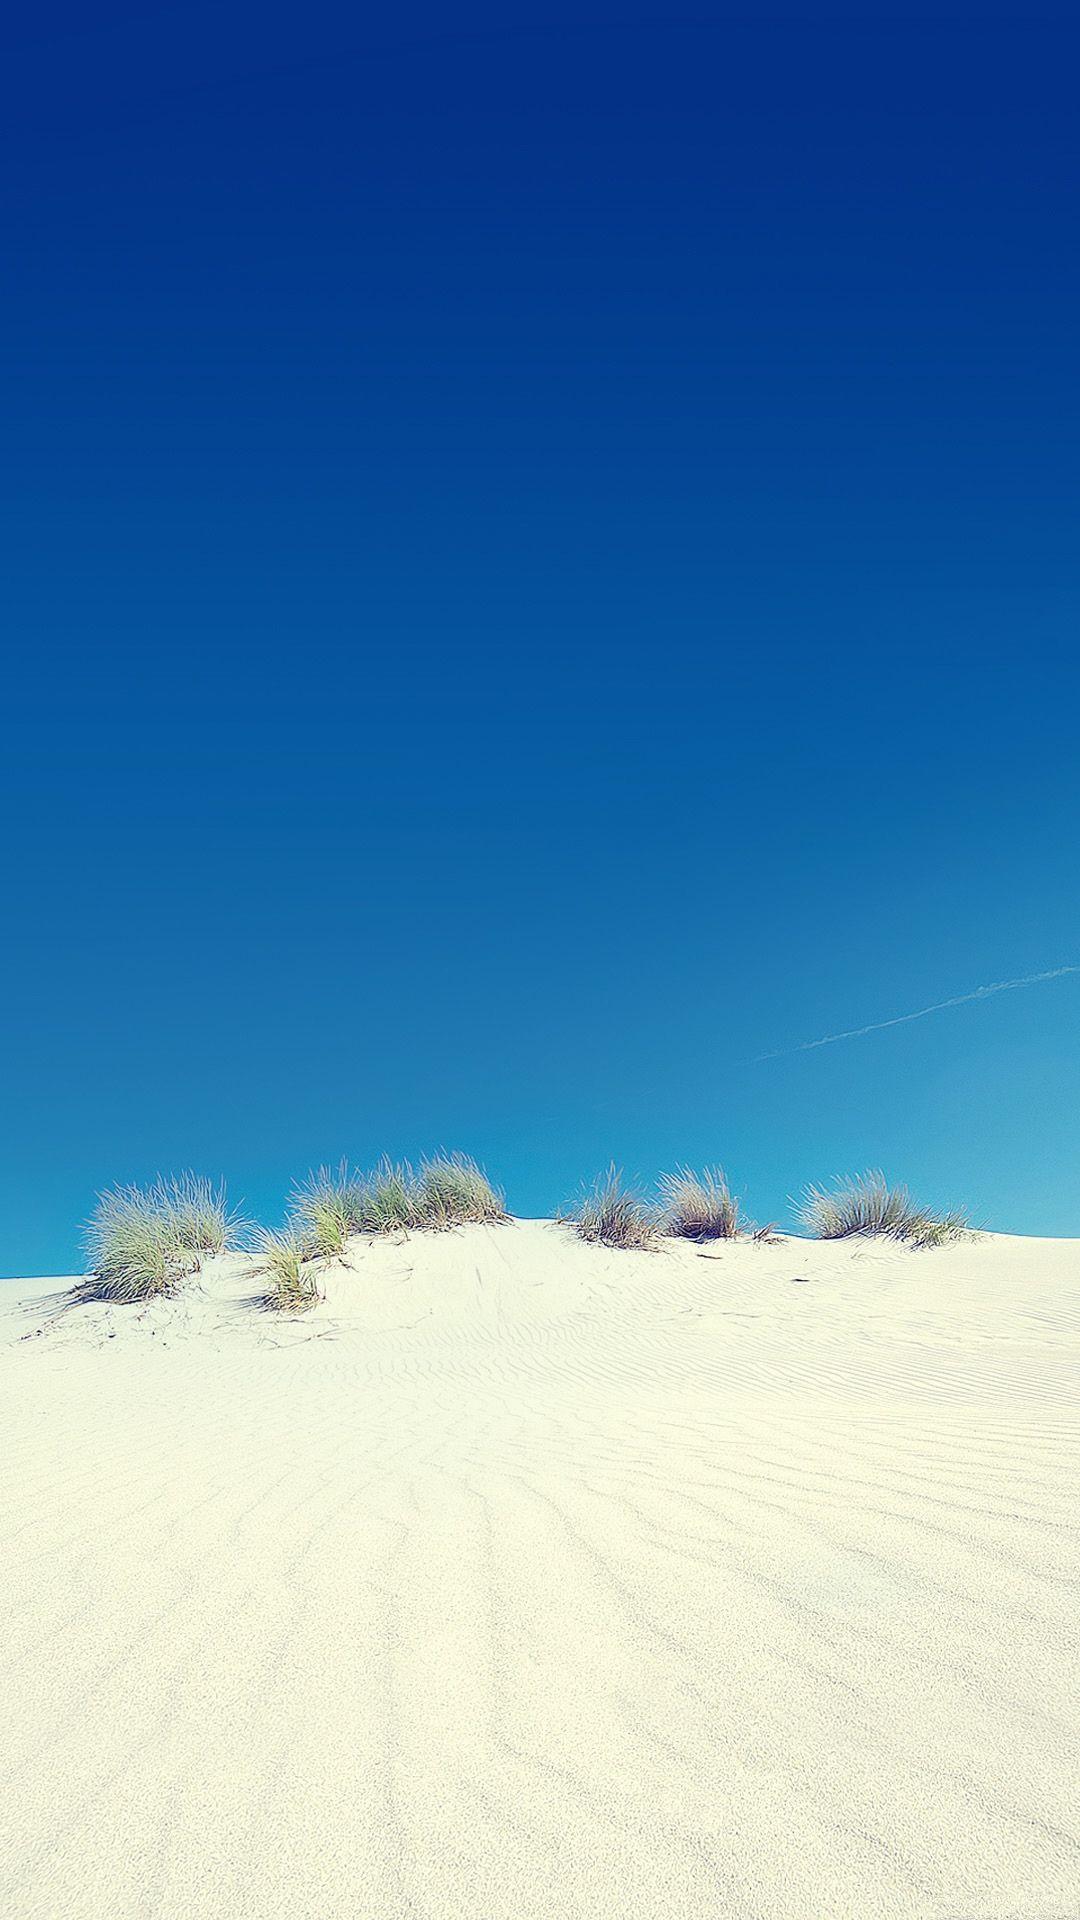 Desert sand dune and clear sky